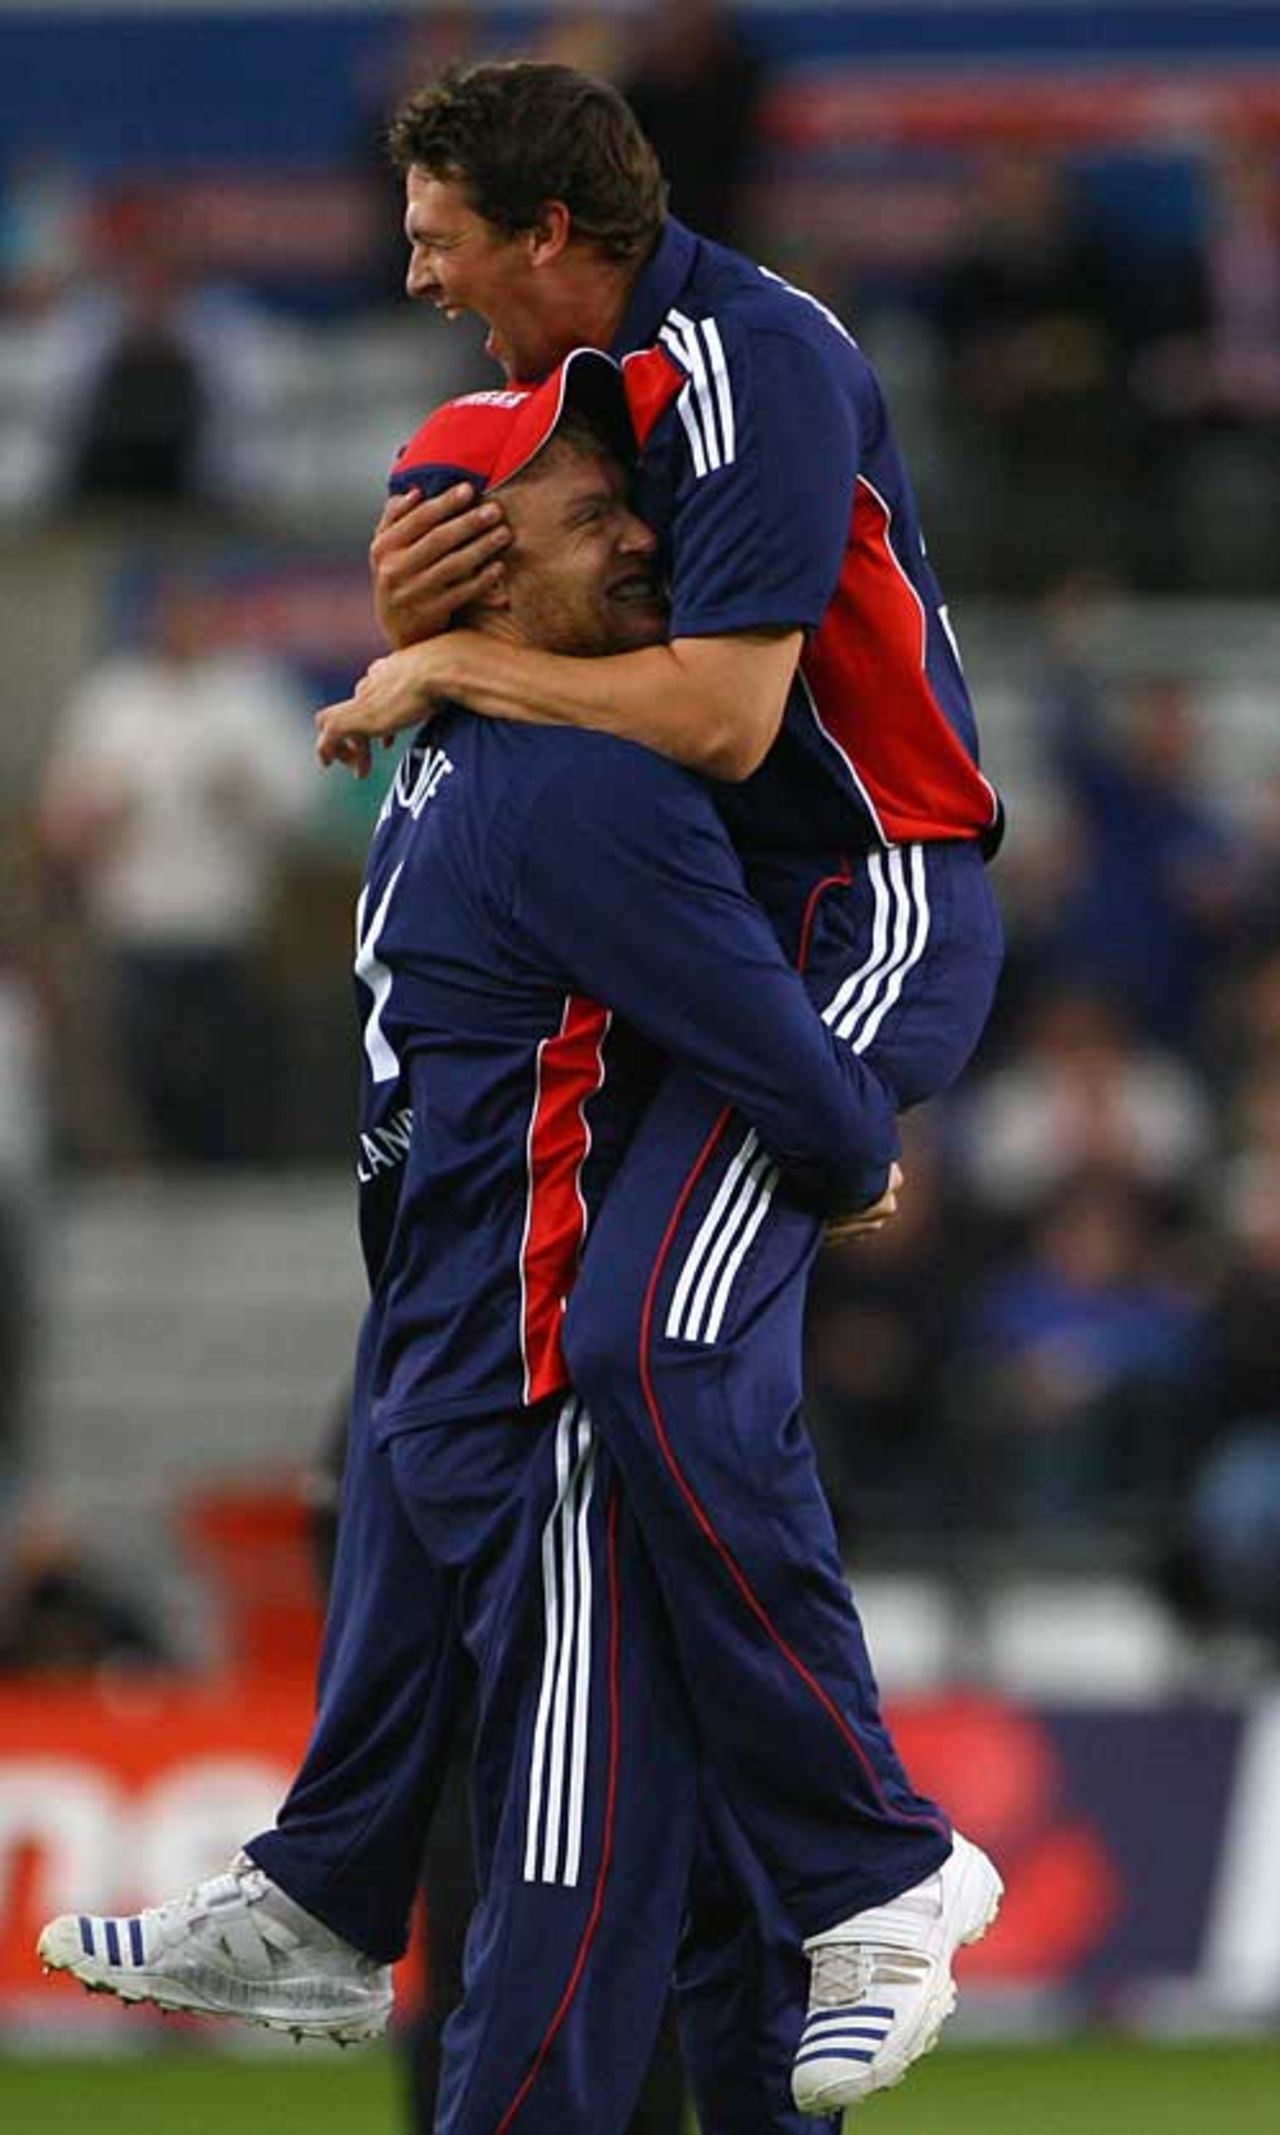 Steve Harmison celebrates his comeback wicket of Graeme Smith, England v South Africa, 1st ODI, Headingley, August 22, 2008